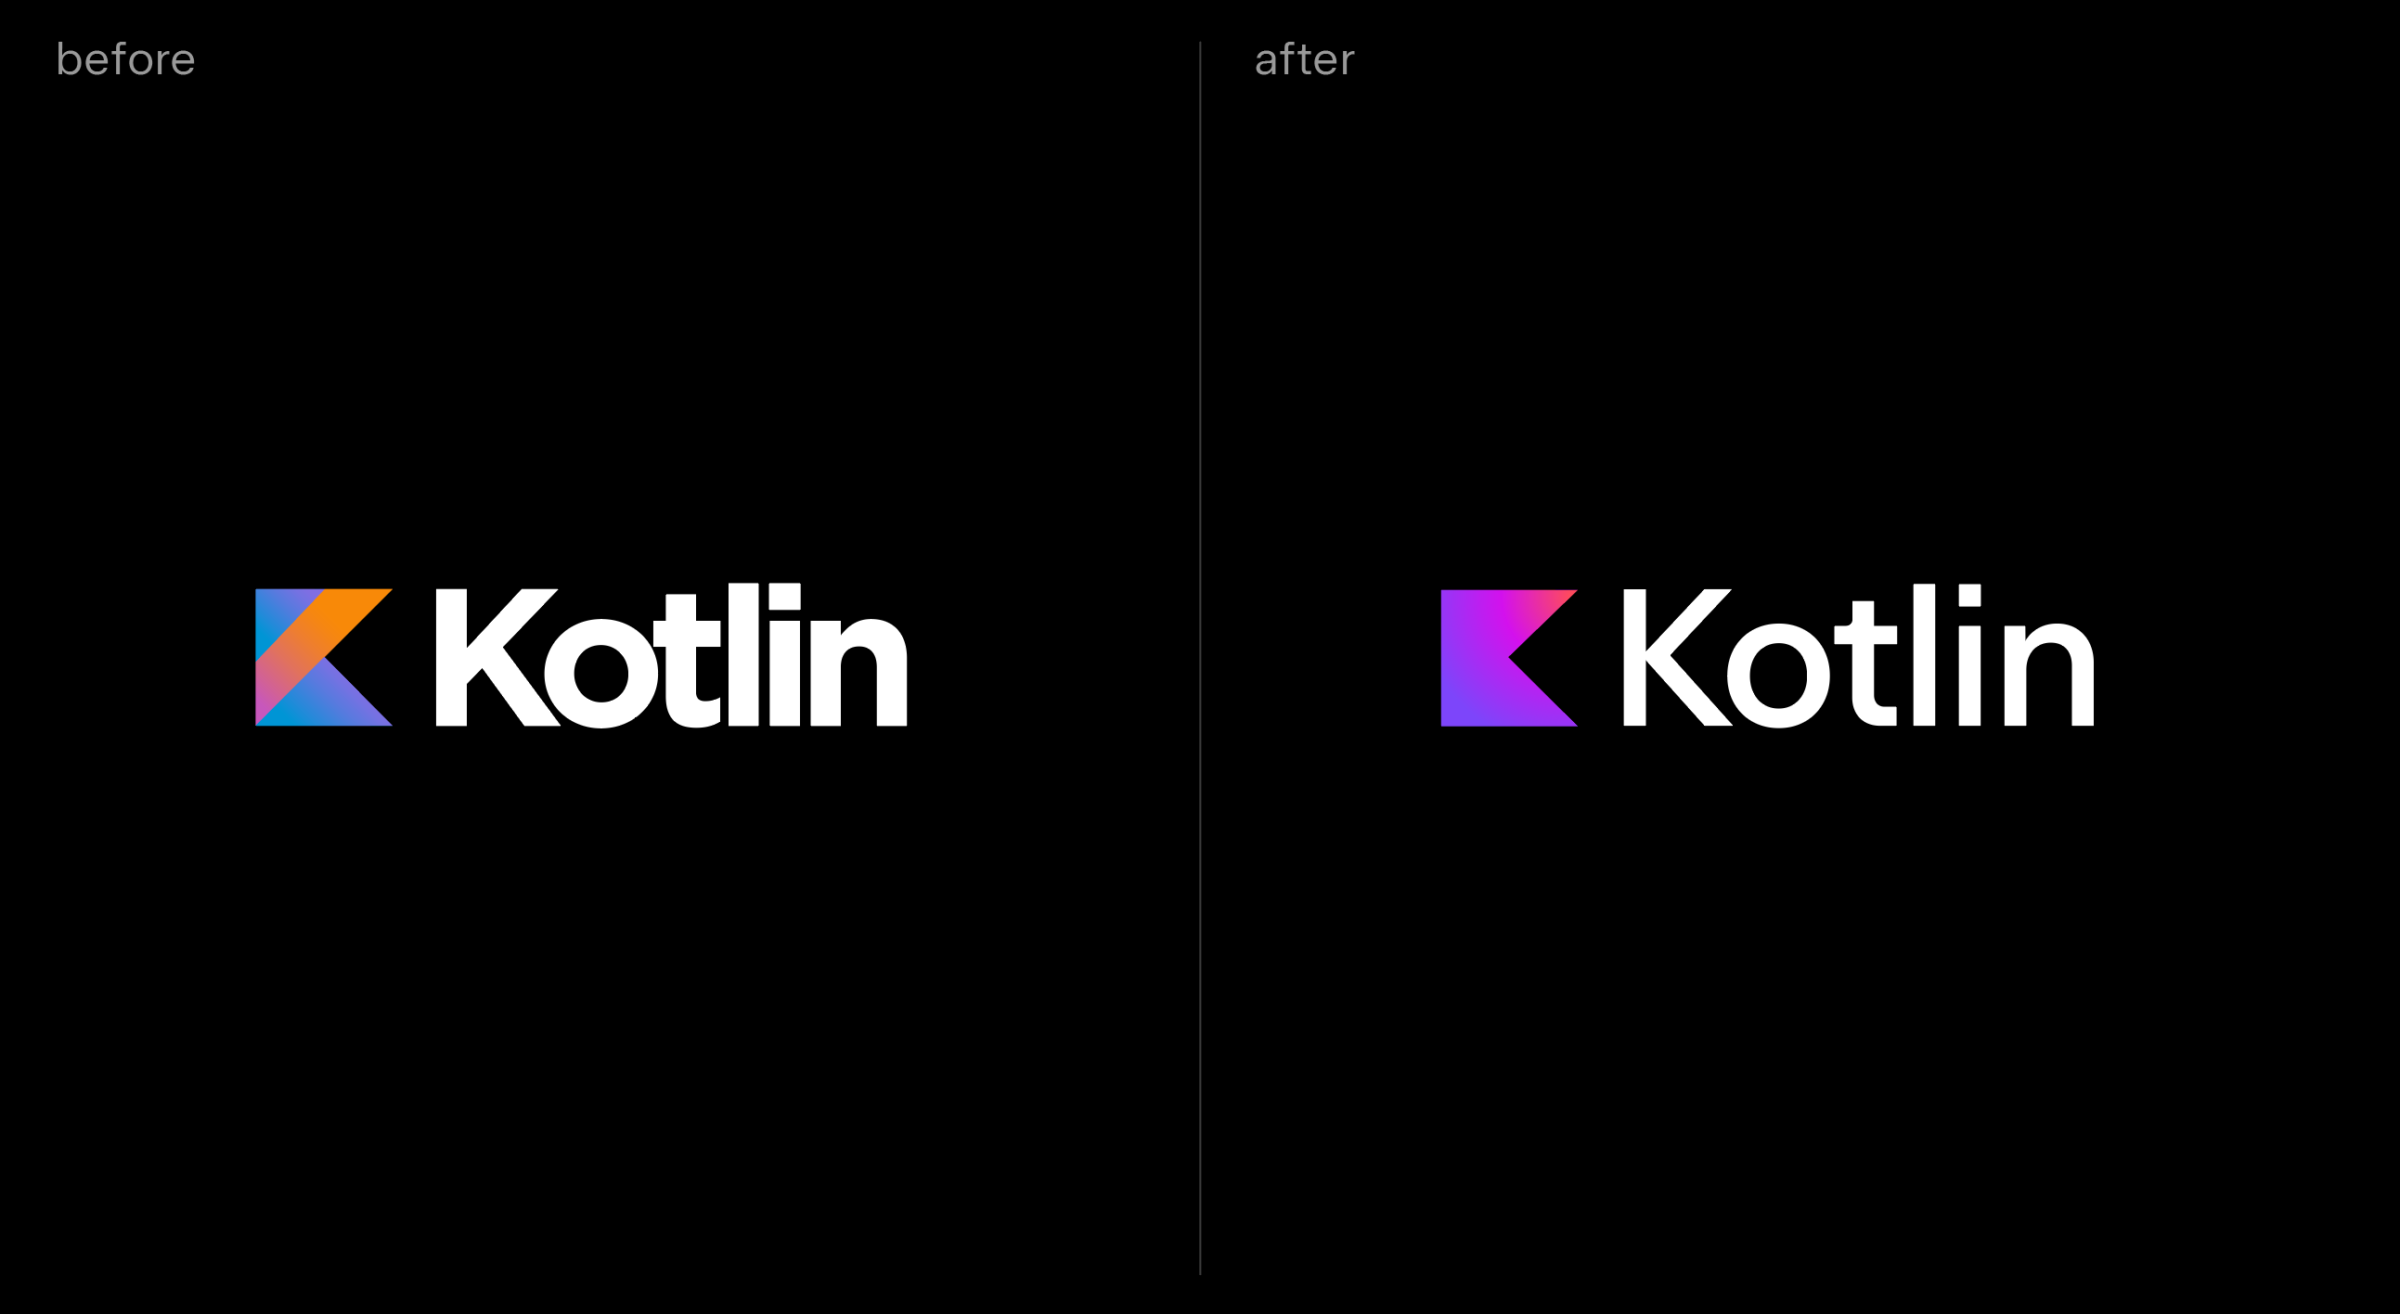 Kotlin 更换了新 logo：更加立体、更加清晰